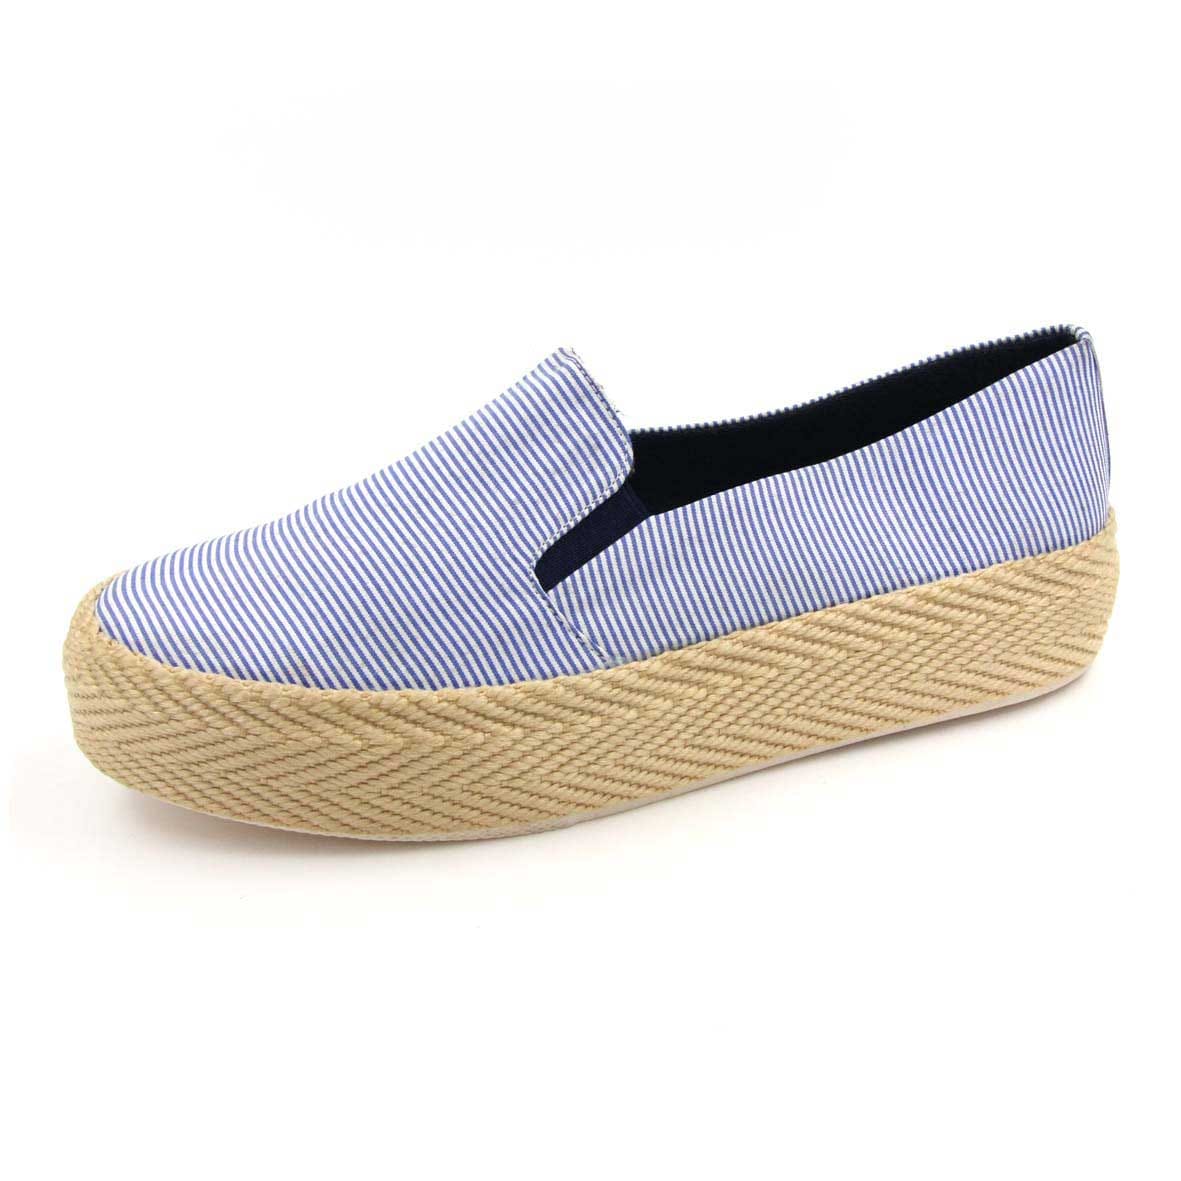 Zapato de Tela a Rayas Azules sin Cordones con Suela de Yute